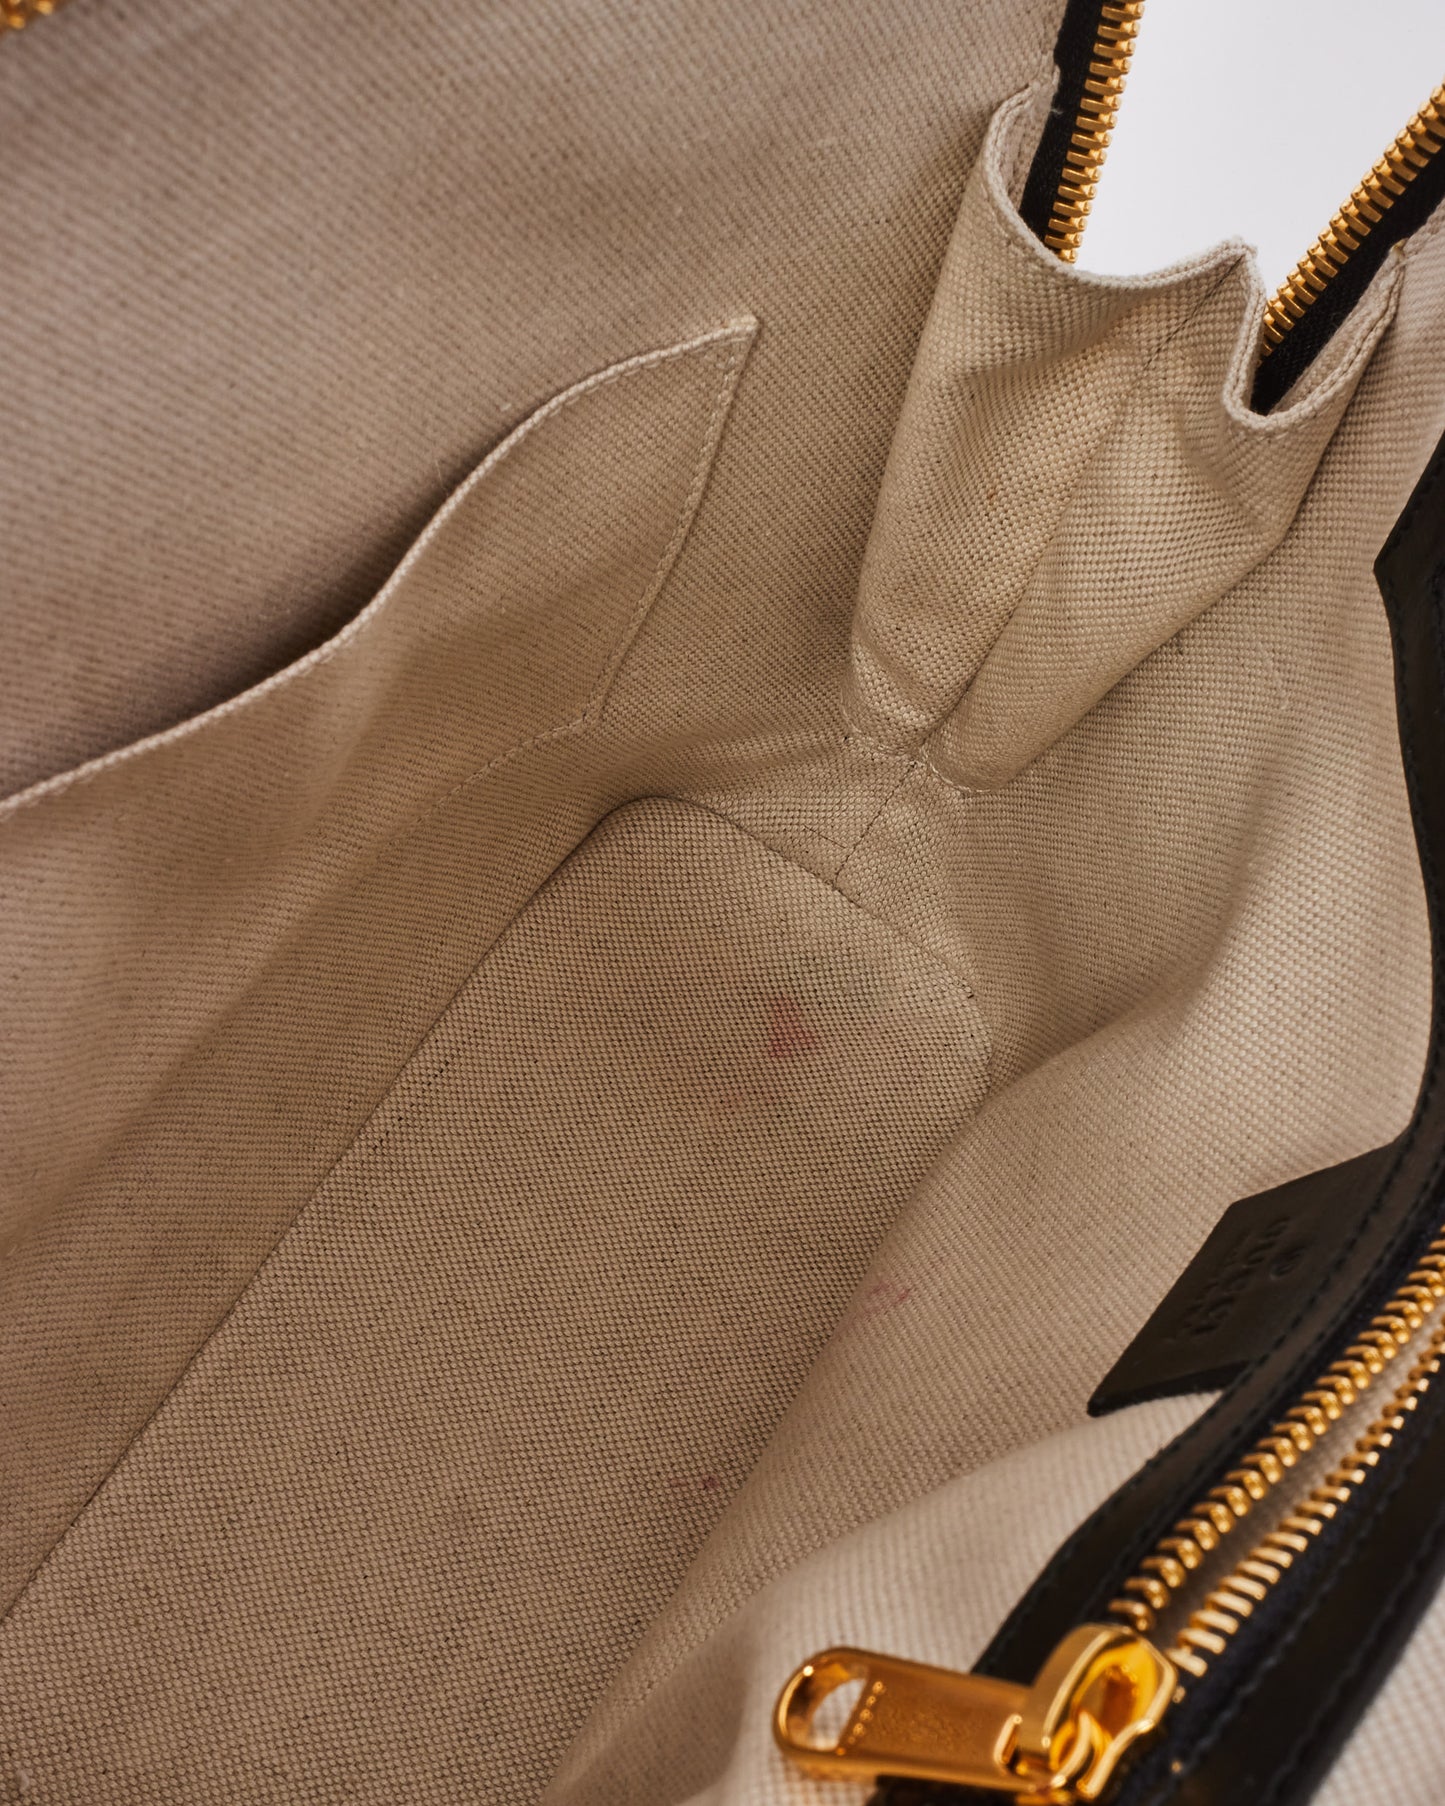 Gucci Black Smooth Leather 1945 Horsebit Top Handle Bag